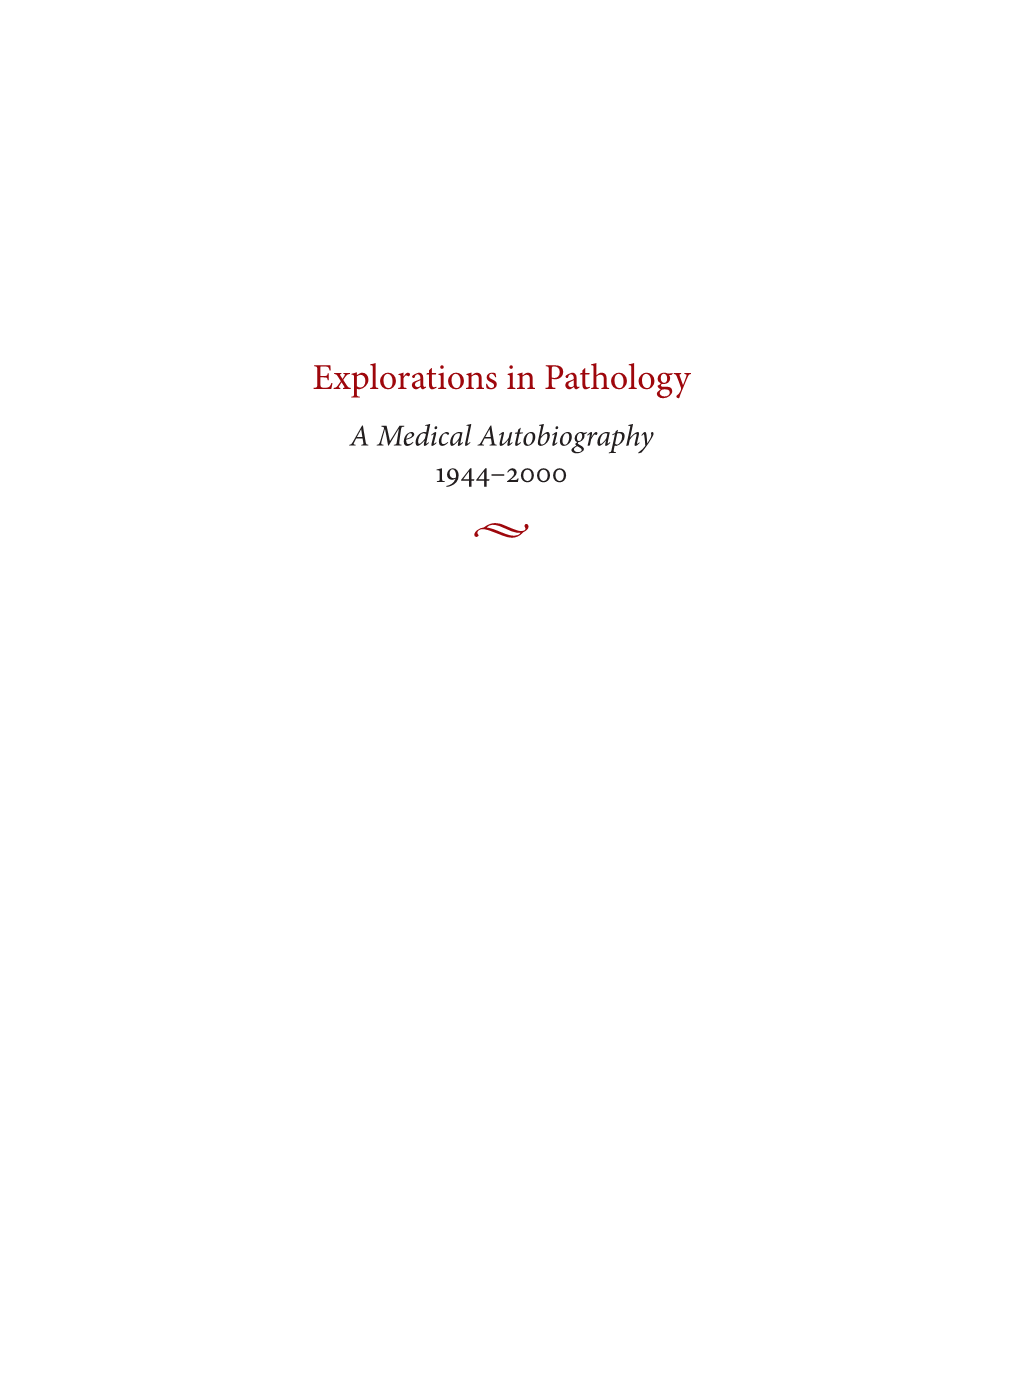 Explorations in Pathology (1944-2000)